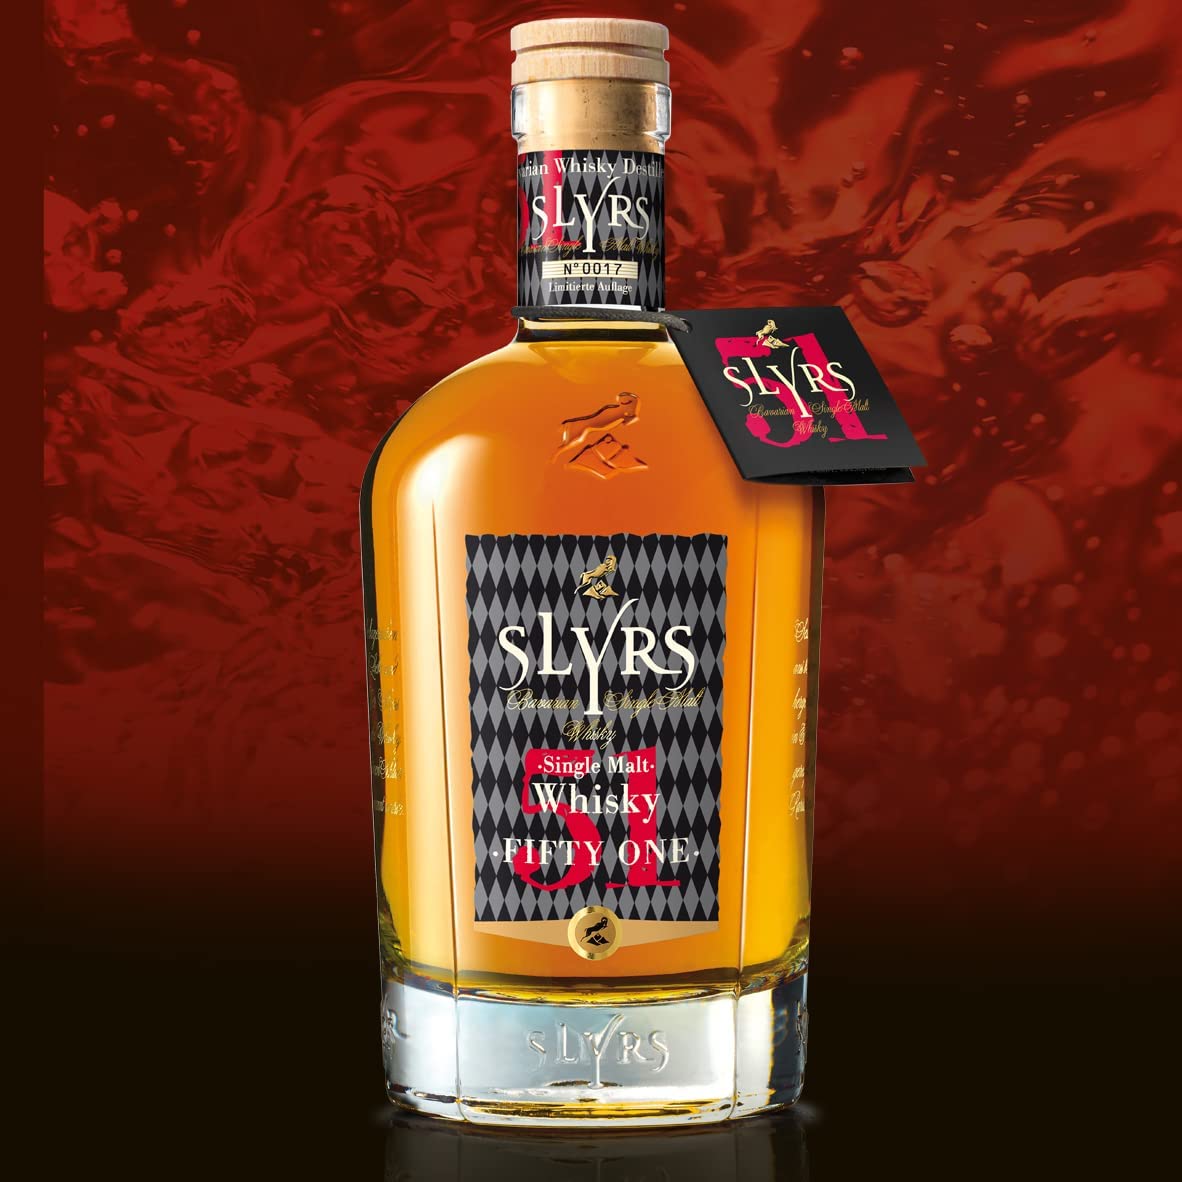 Malt My Bavarian Whisky One Slyrs Single vol. Whisky Life – Fifty 51% –